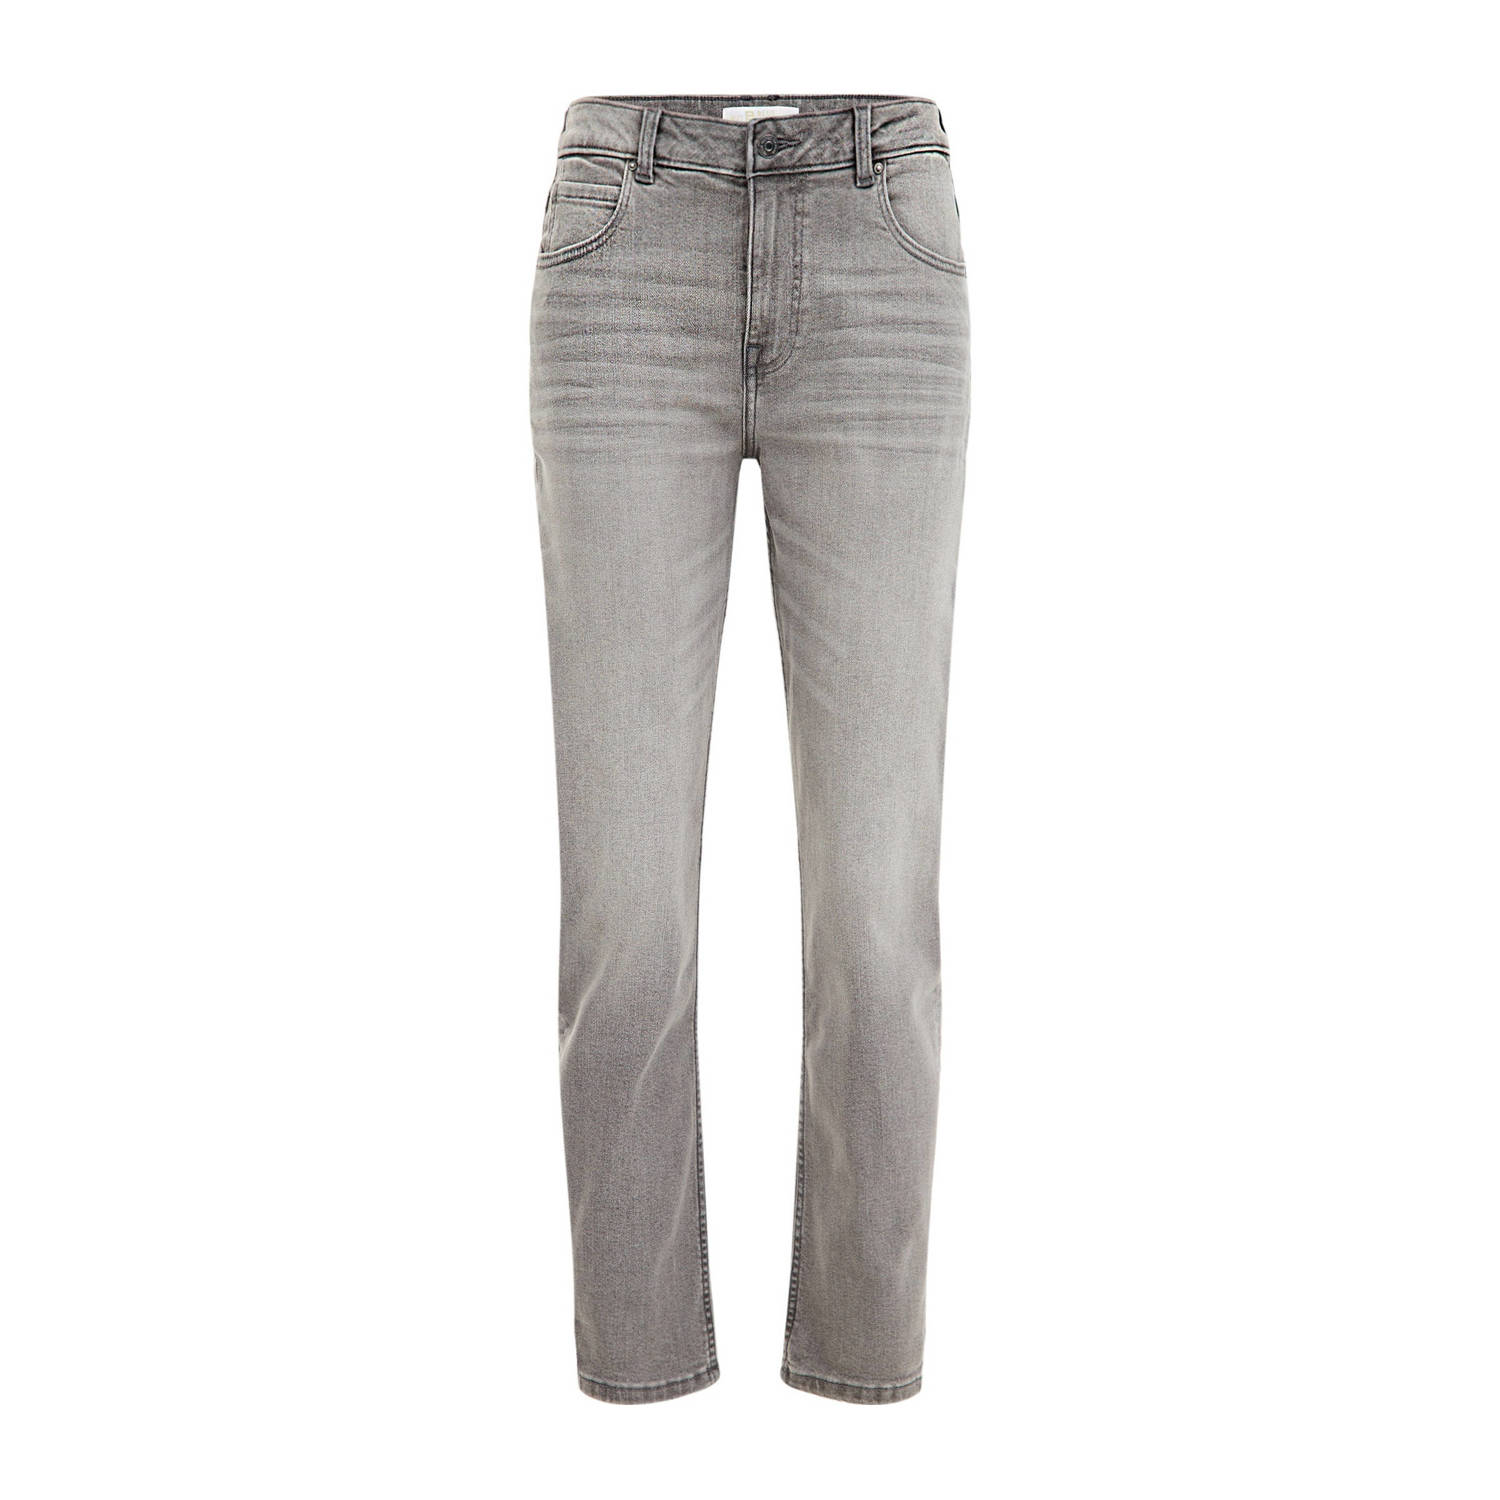 WE Fashion tapered jeans grey denim